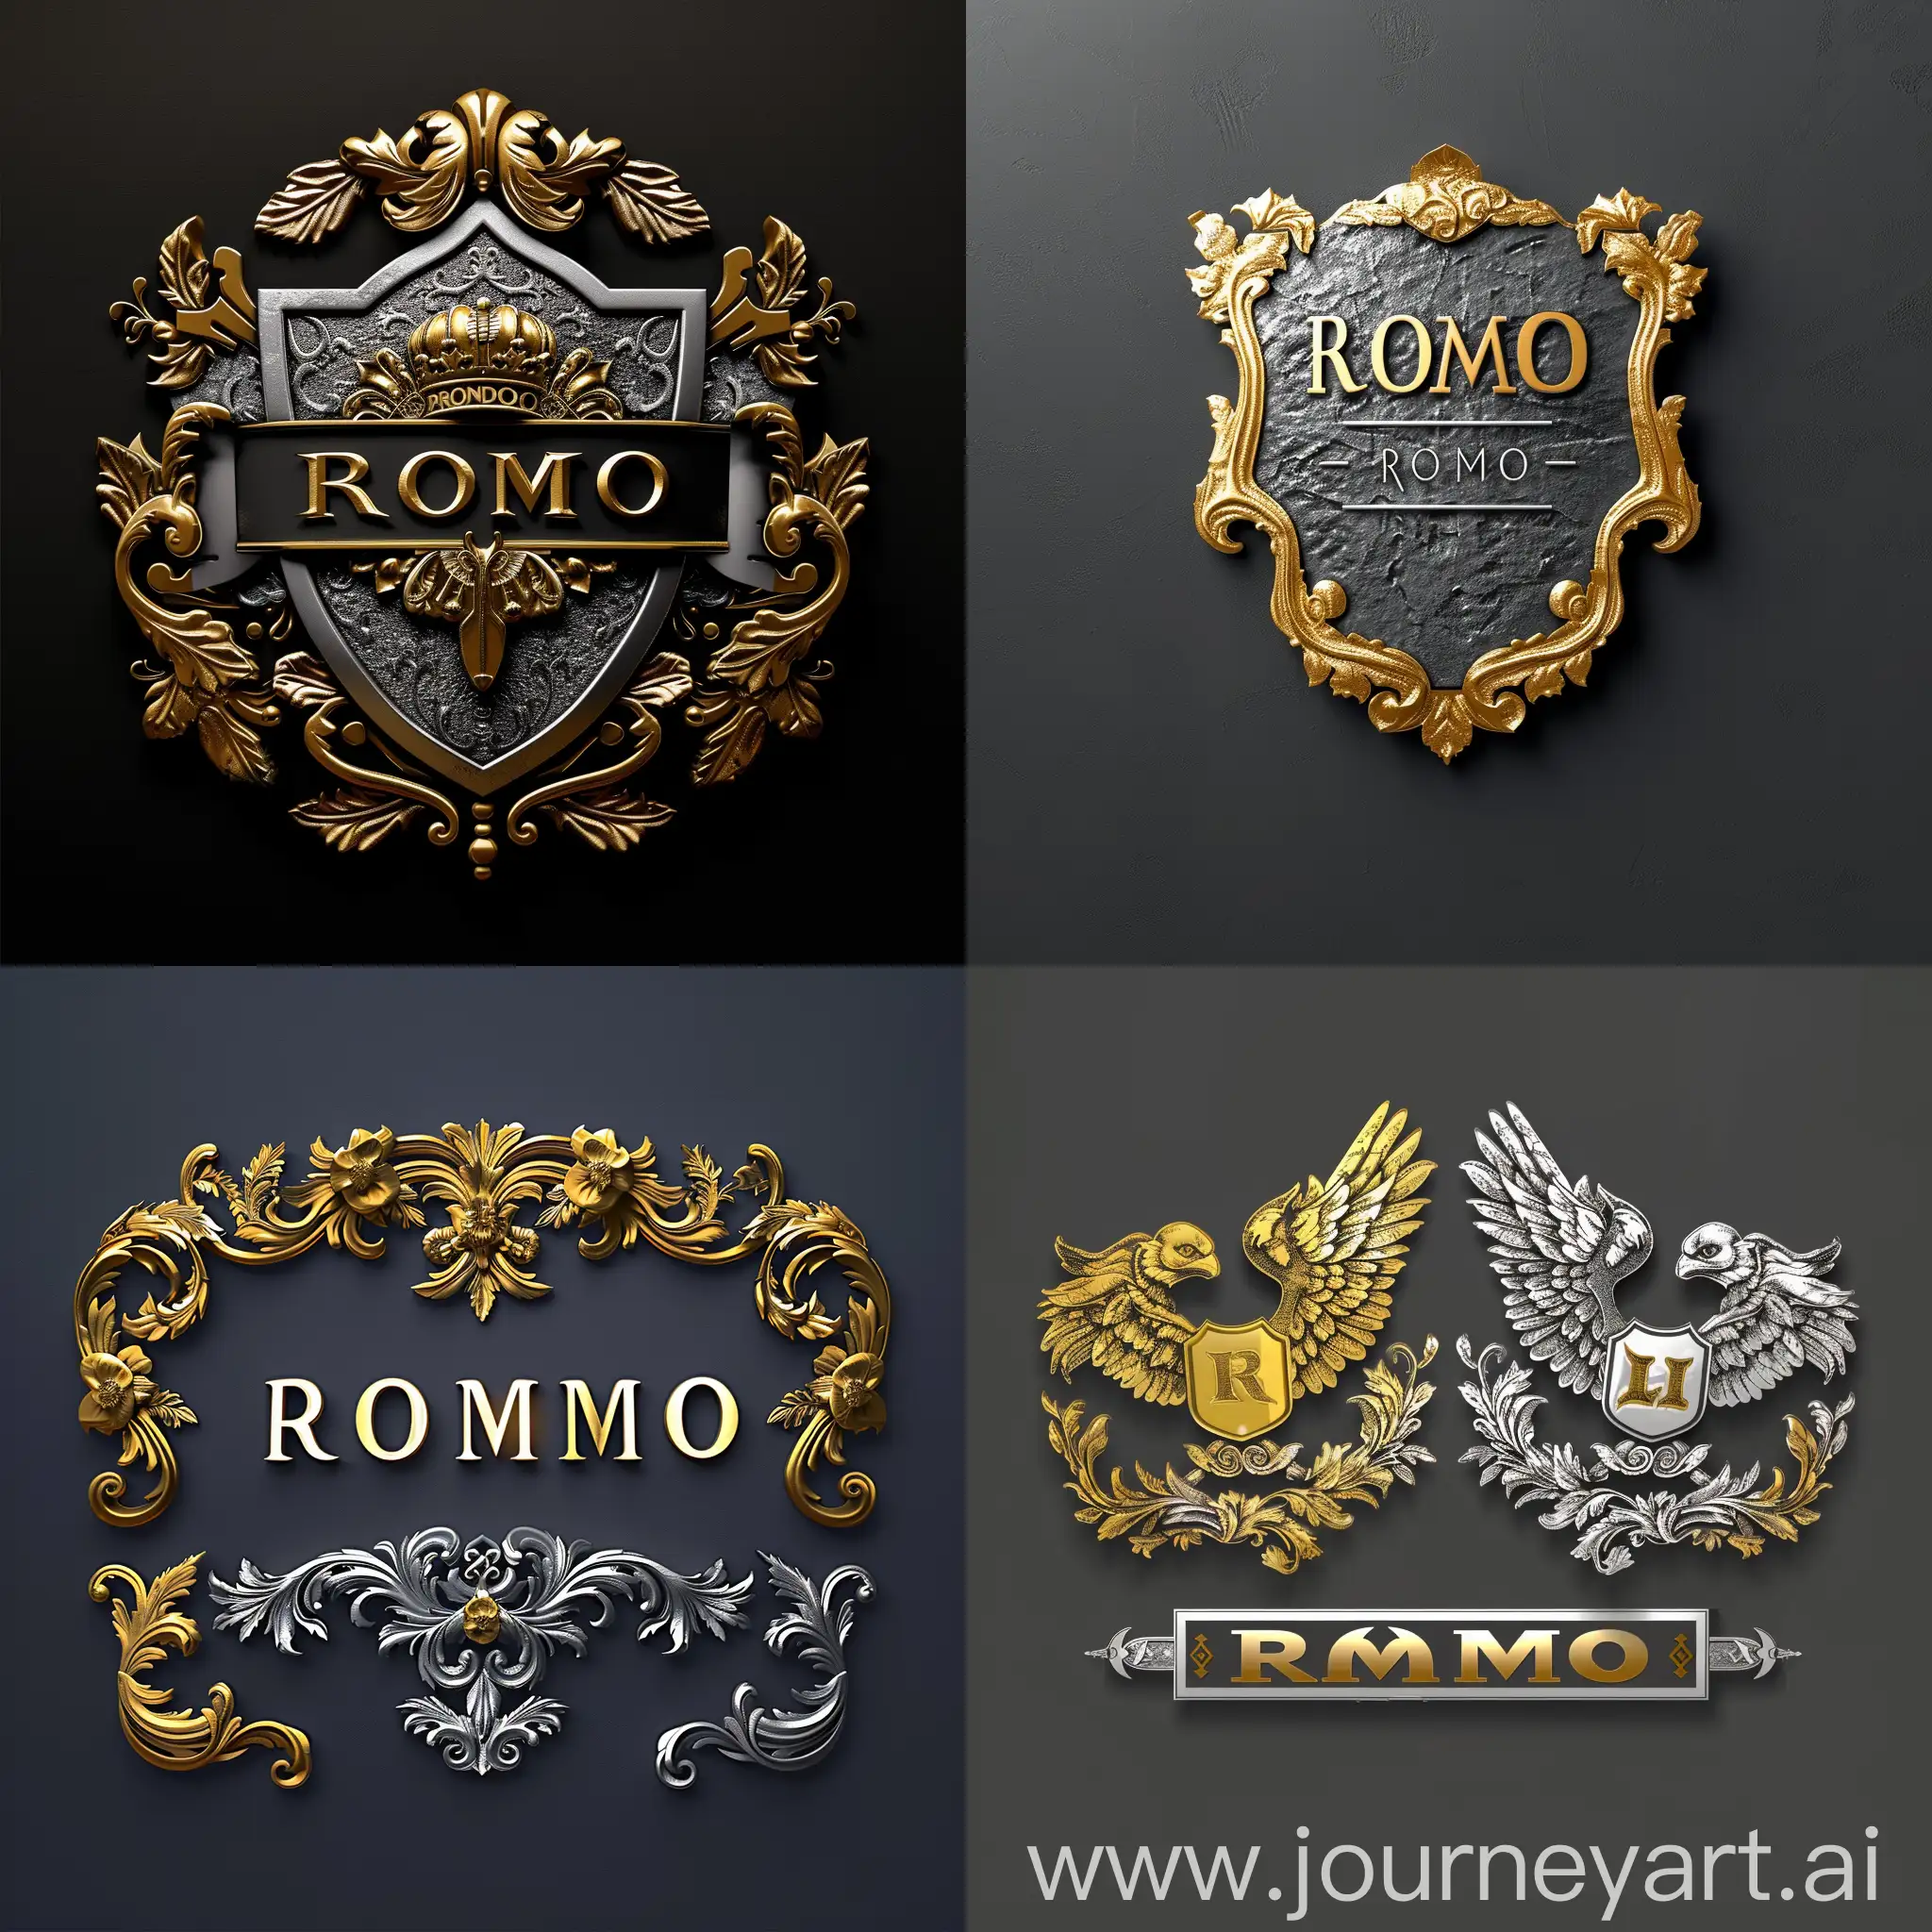 Family Logo, Italian, Name: Romano, Rome Type, Gold and Silver, GTA Style